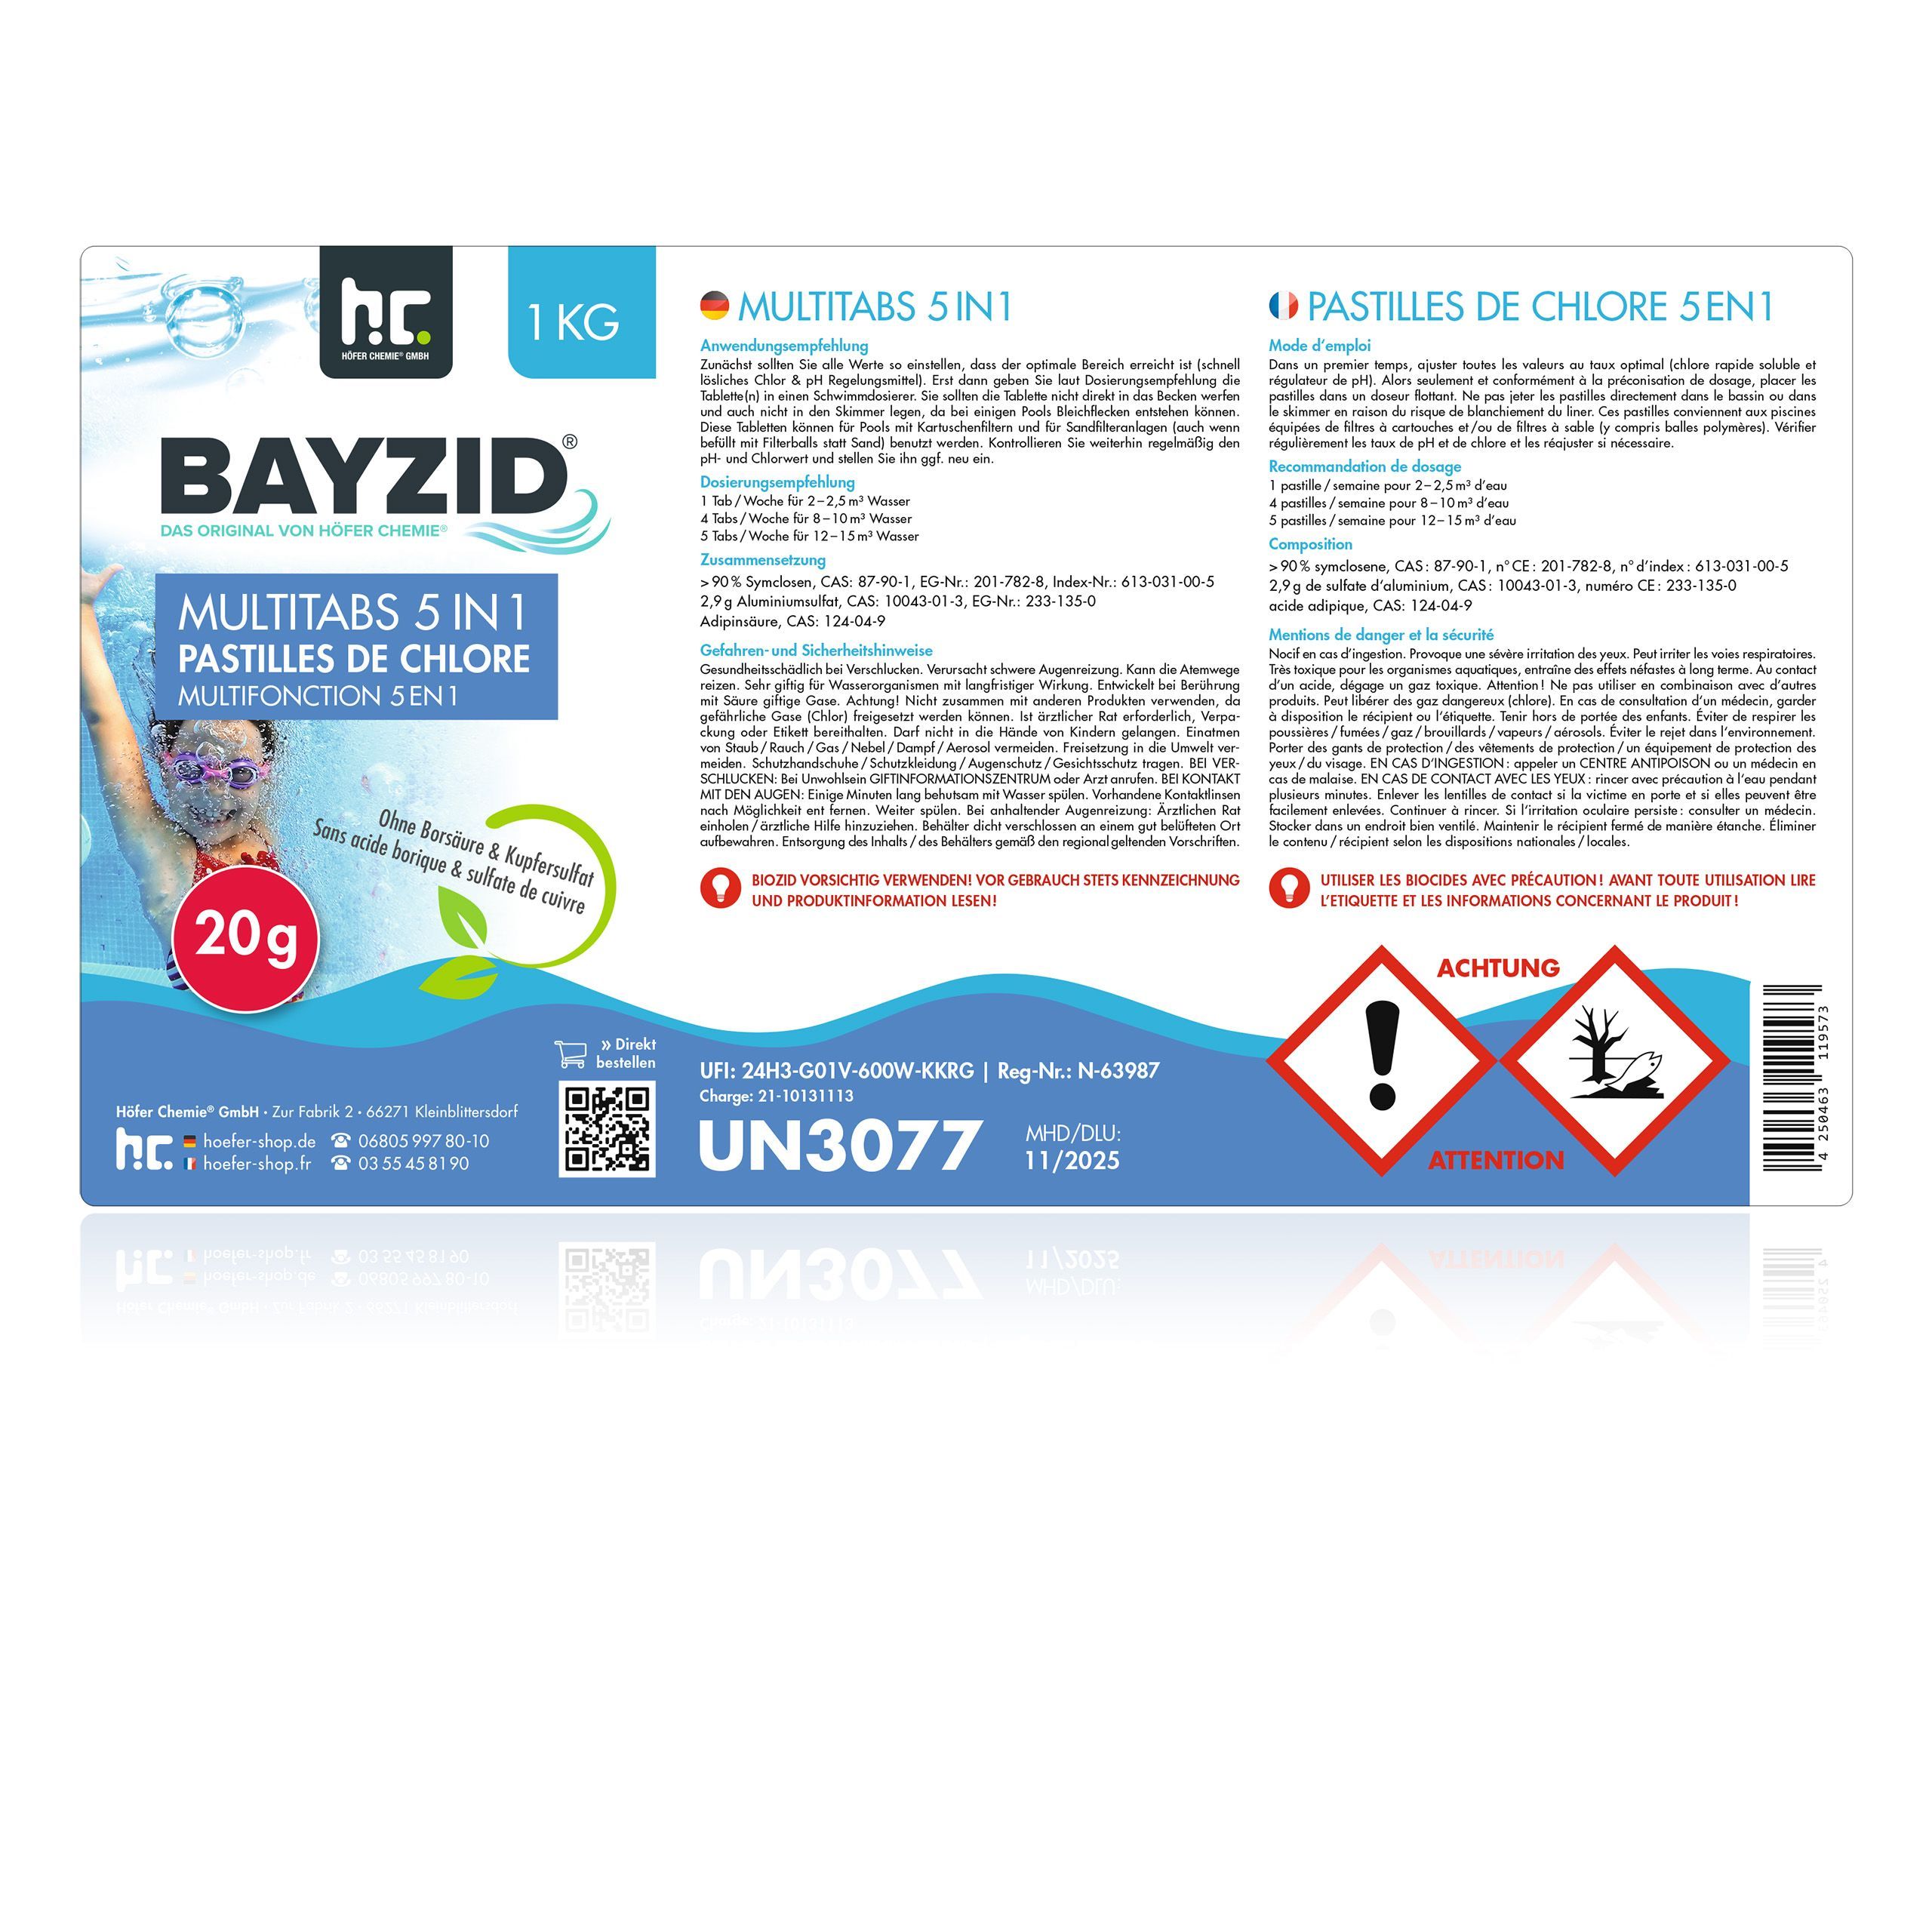 1 Kg Bayzid® pastilles de chlore multifonction 20g 5 en 1